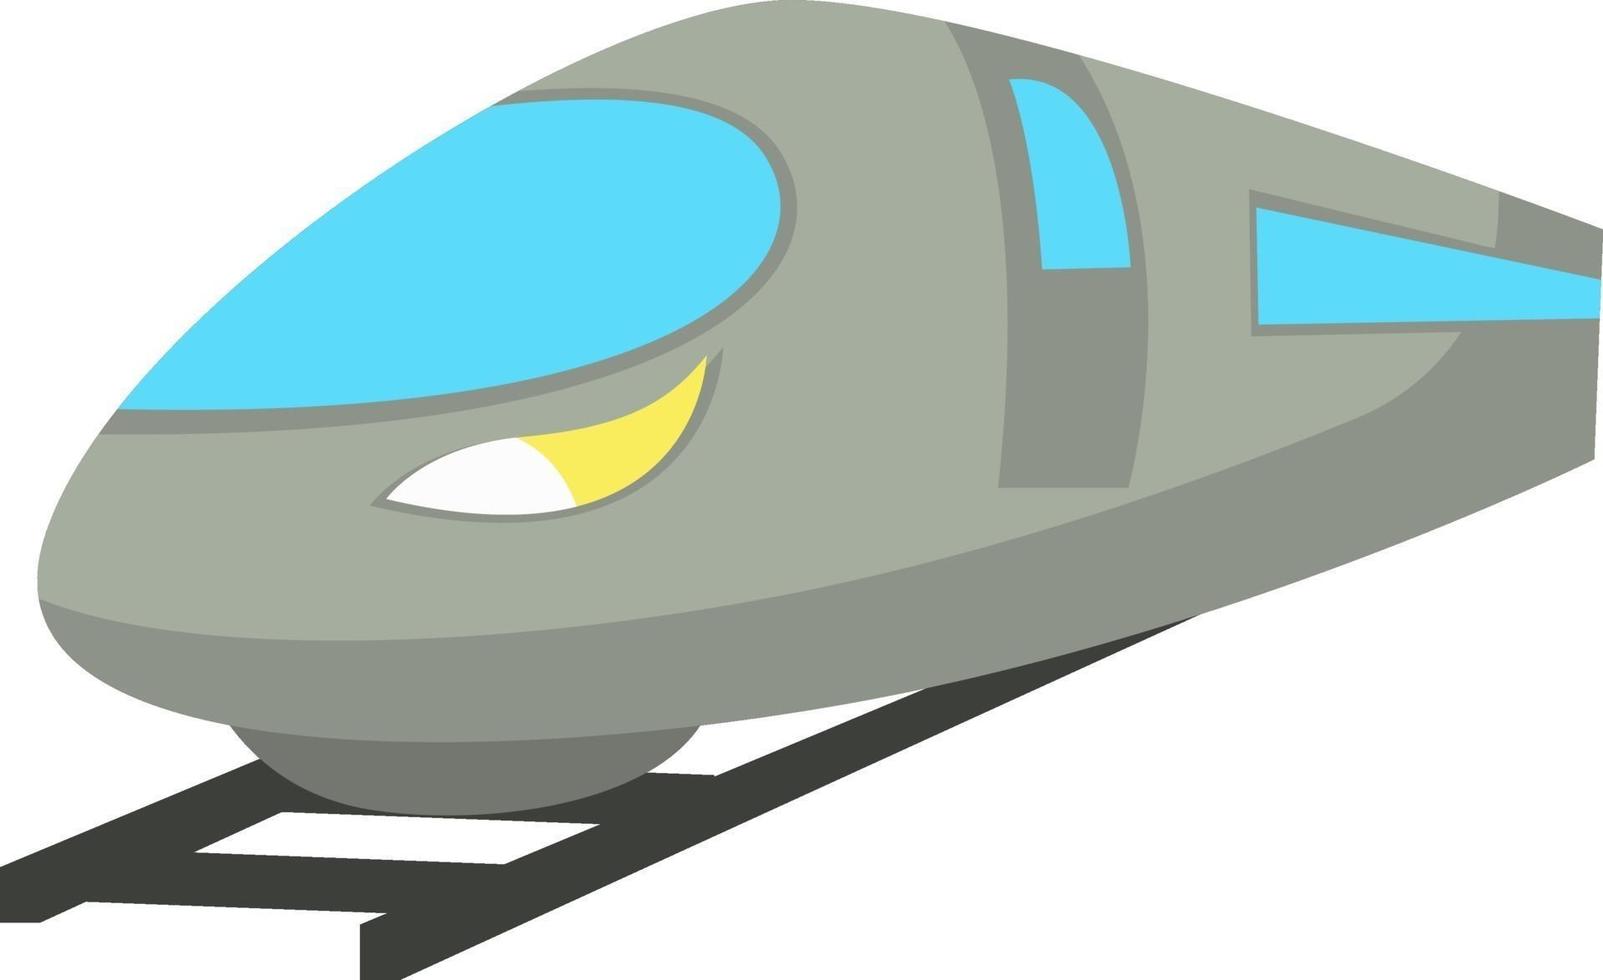 Fast train, illustration, vector on white background